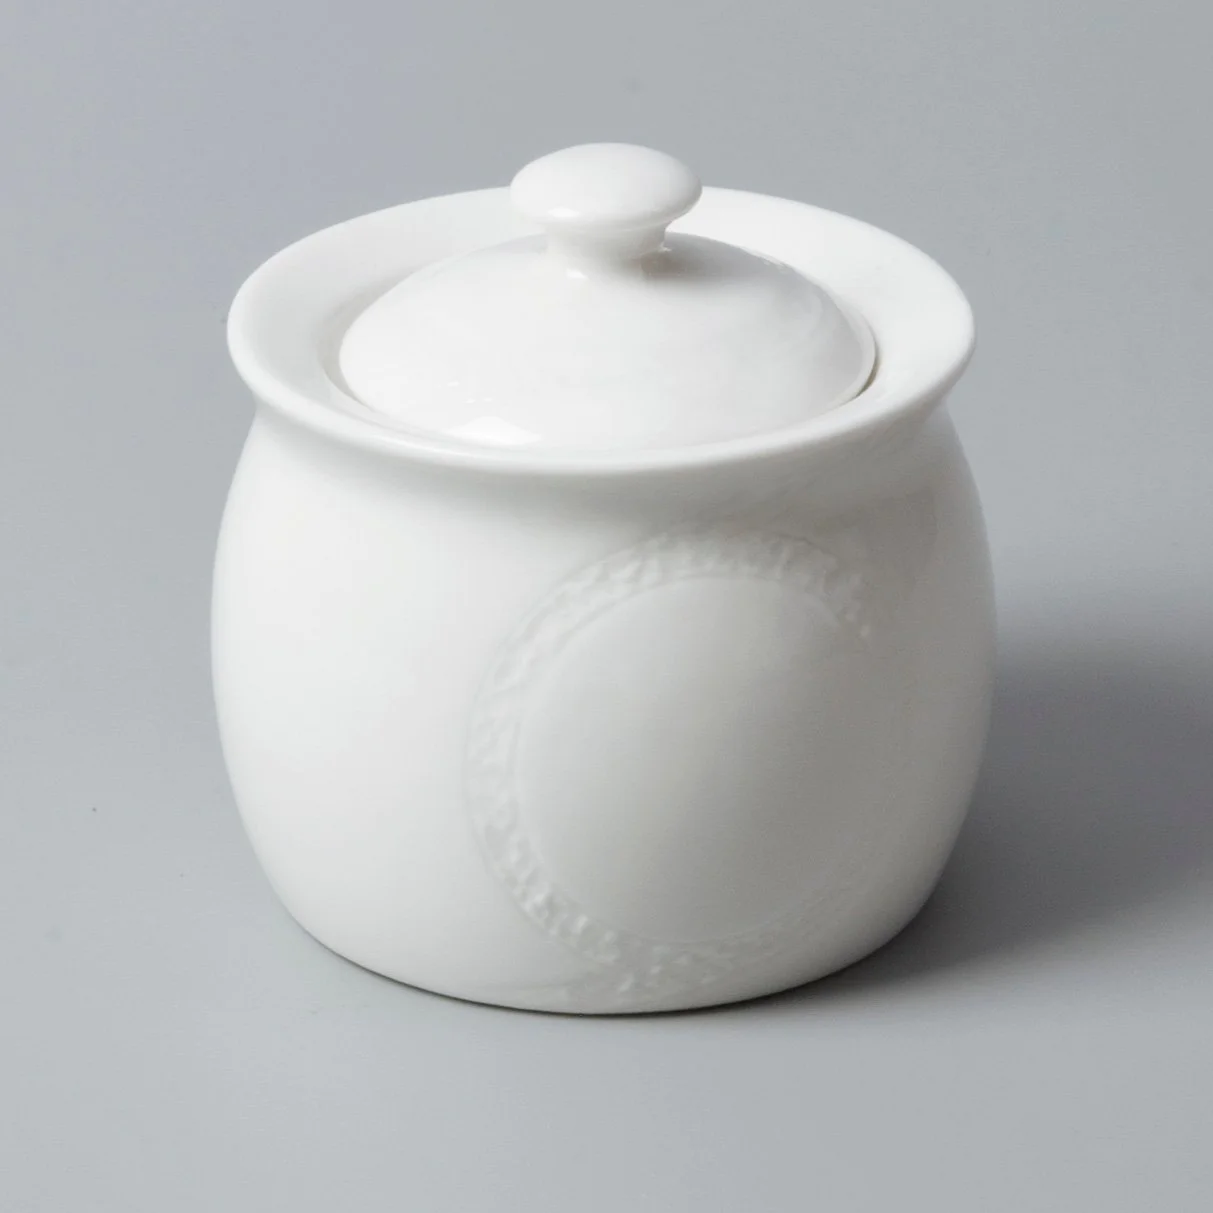 Hot white porcelain tableware stock Two Eight Brand